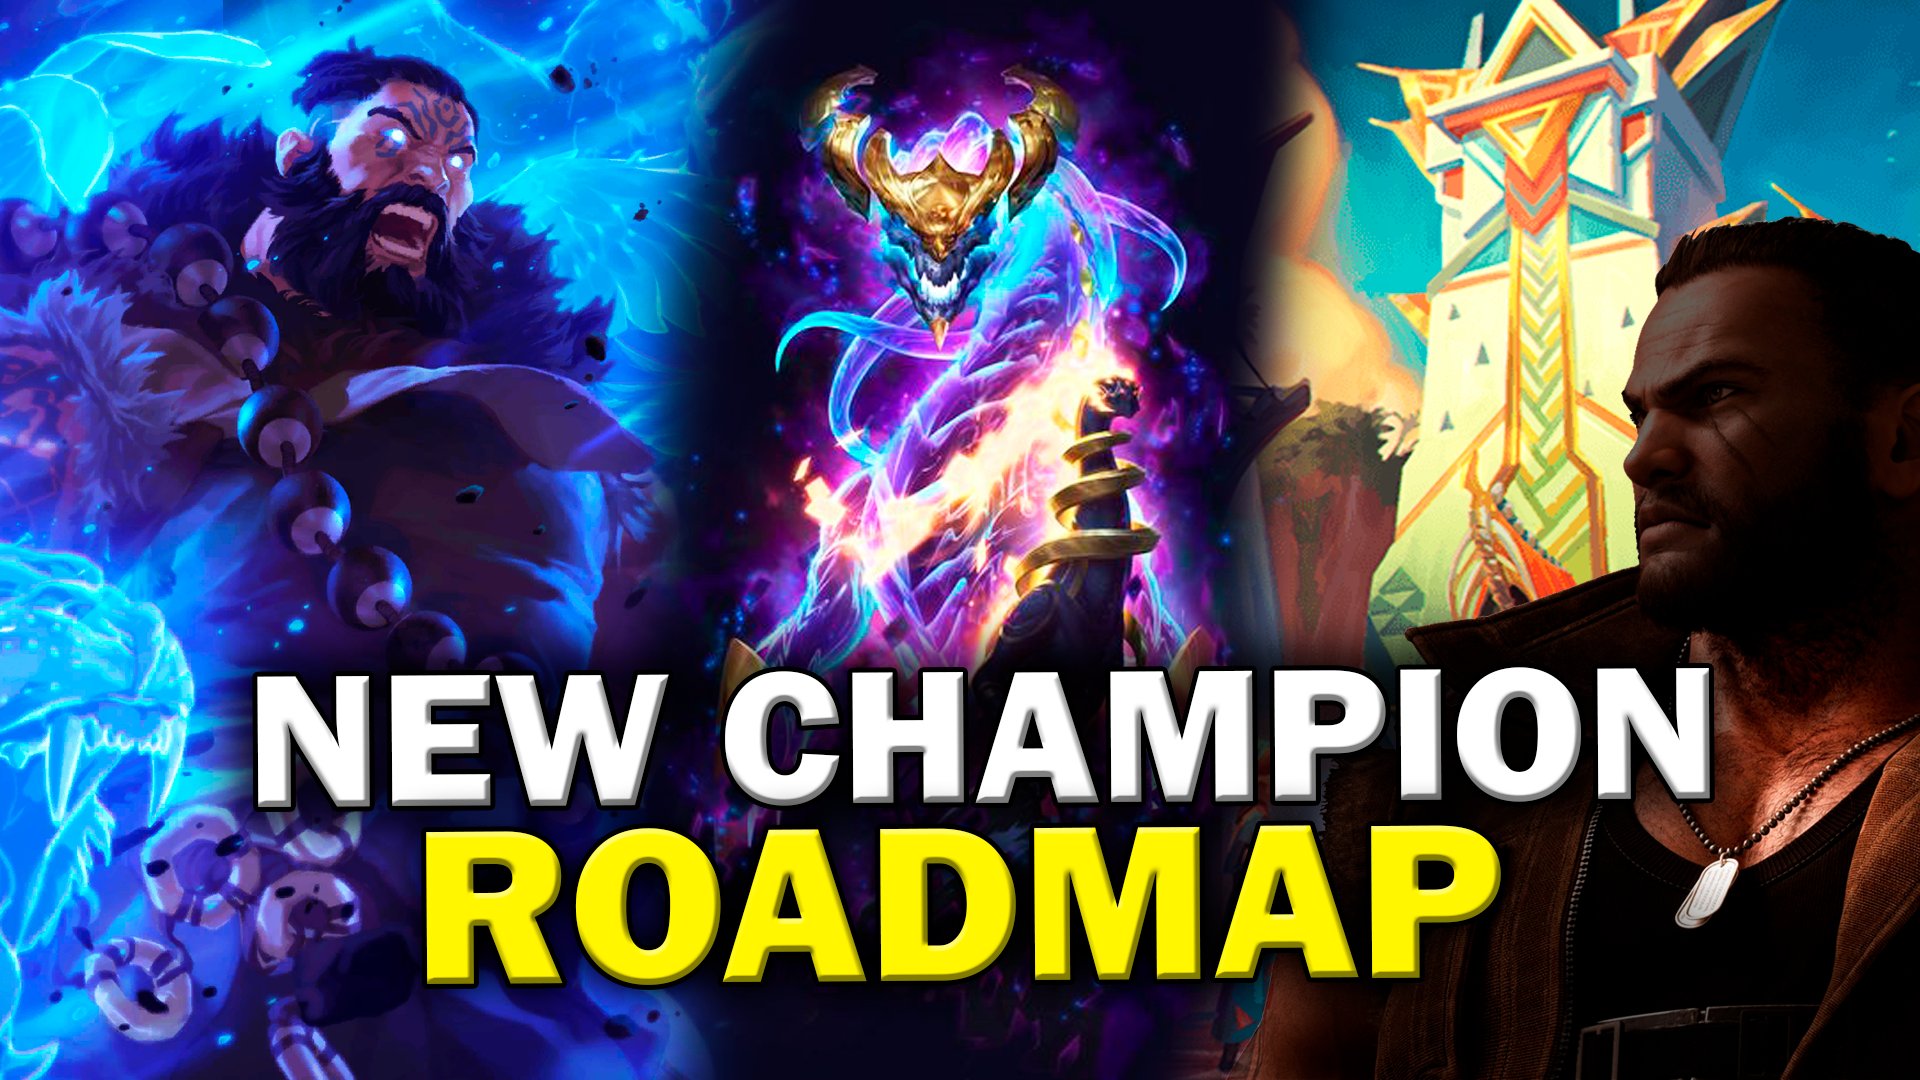 New champion roadmap 2022 - 2023 - Not A Gamer